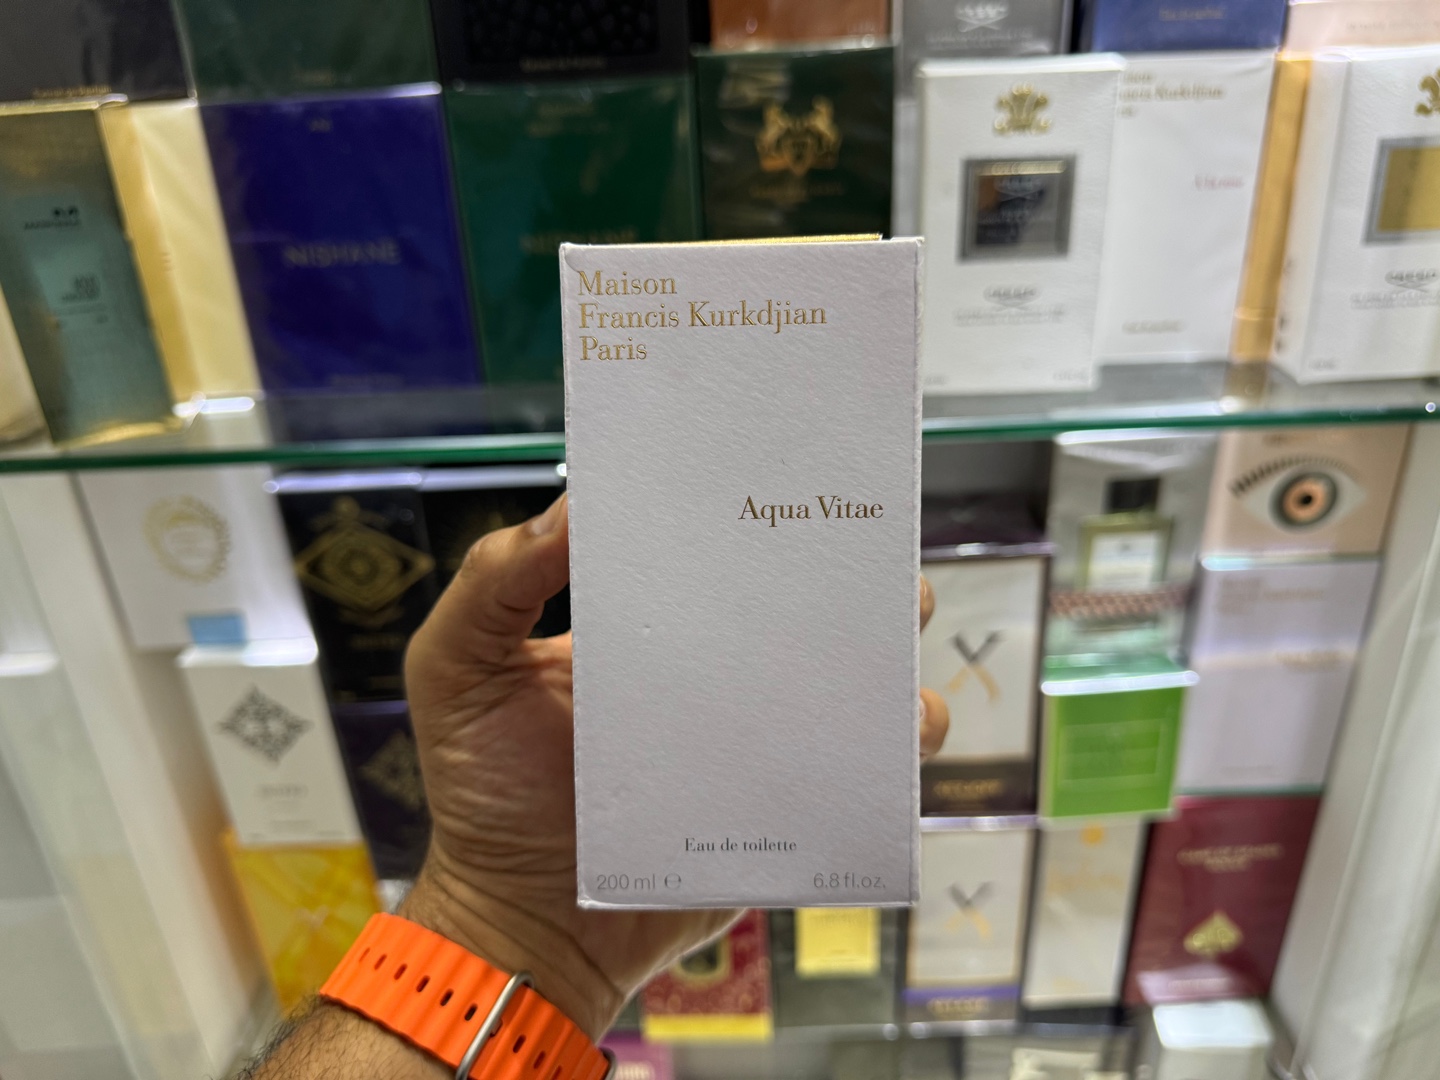 joyas, relojes y accesorios - Perfume Maison Francis Kurkdjian Paris Aqua Vitae EDT 200ML Nuevo, $ 19,500 NEG 2